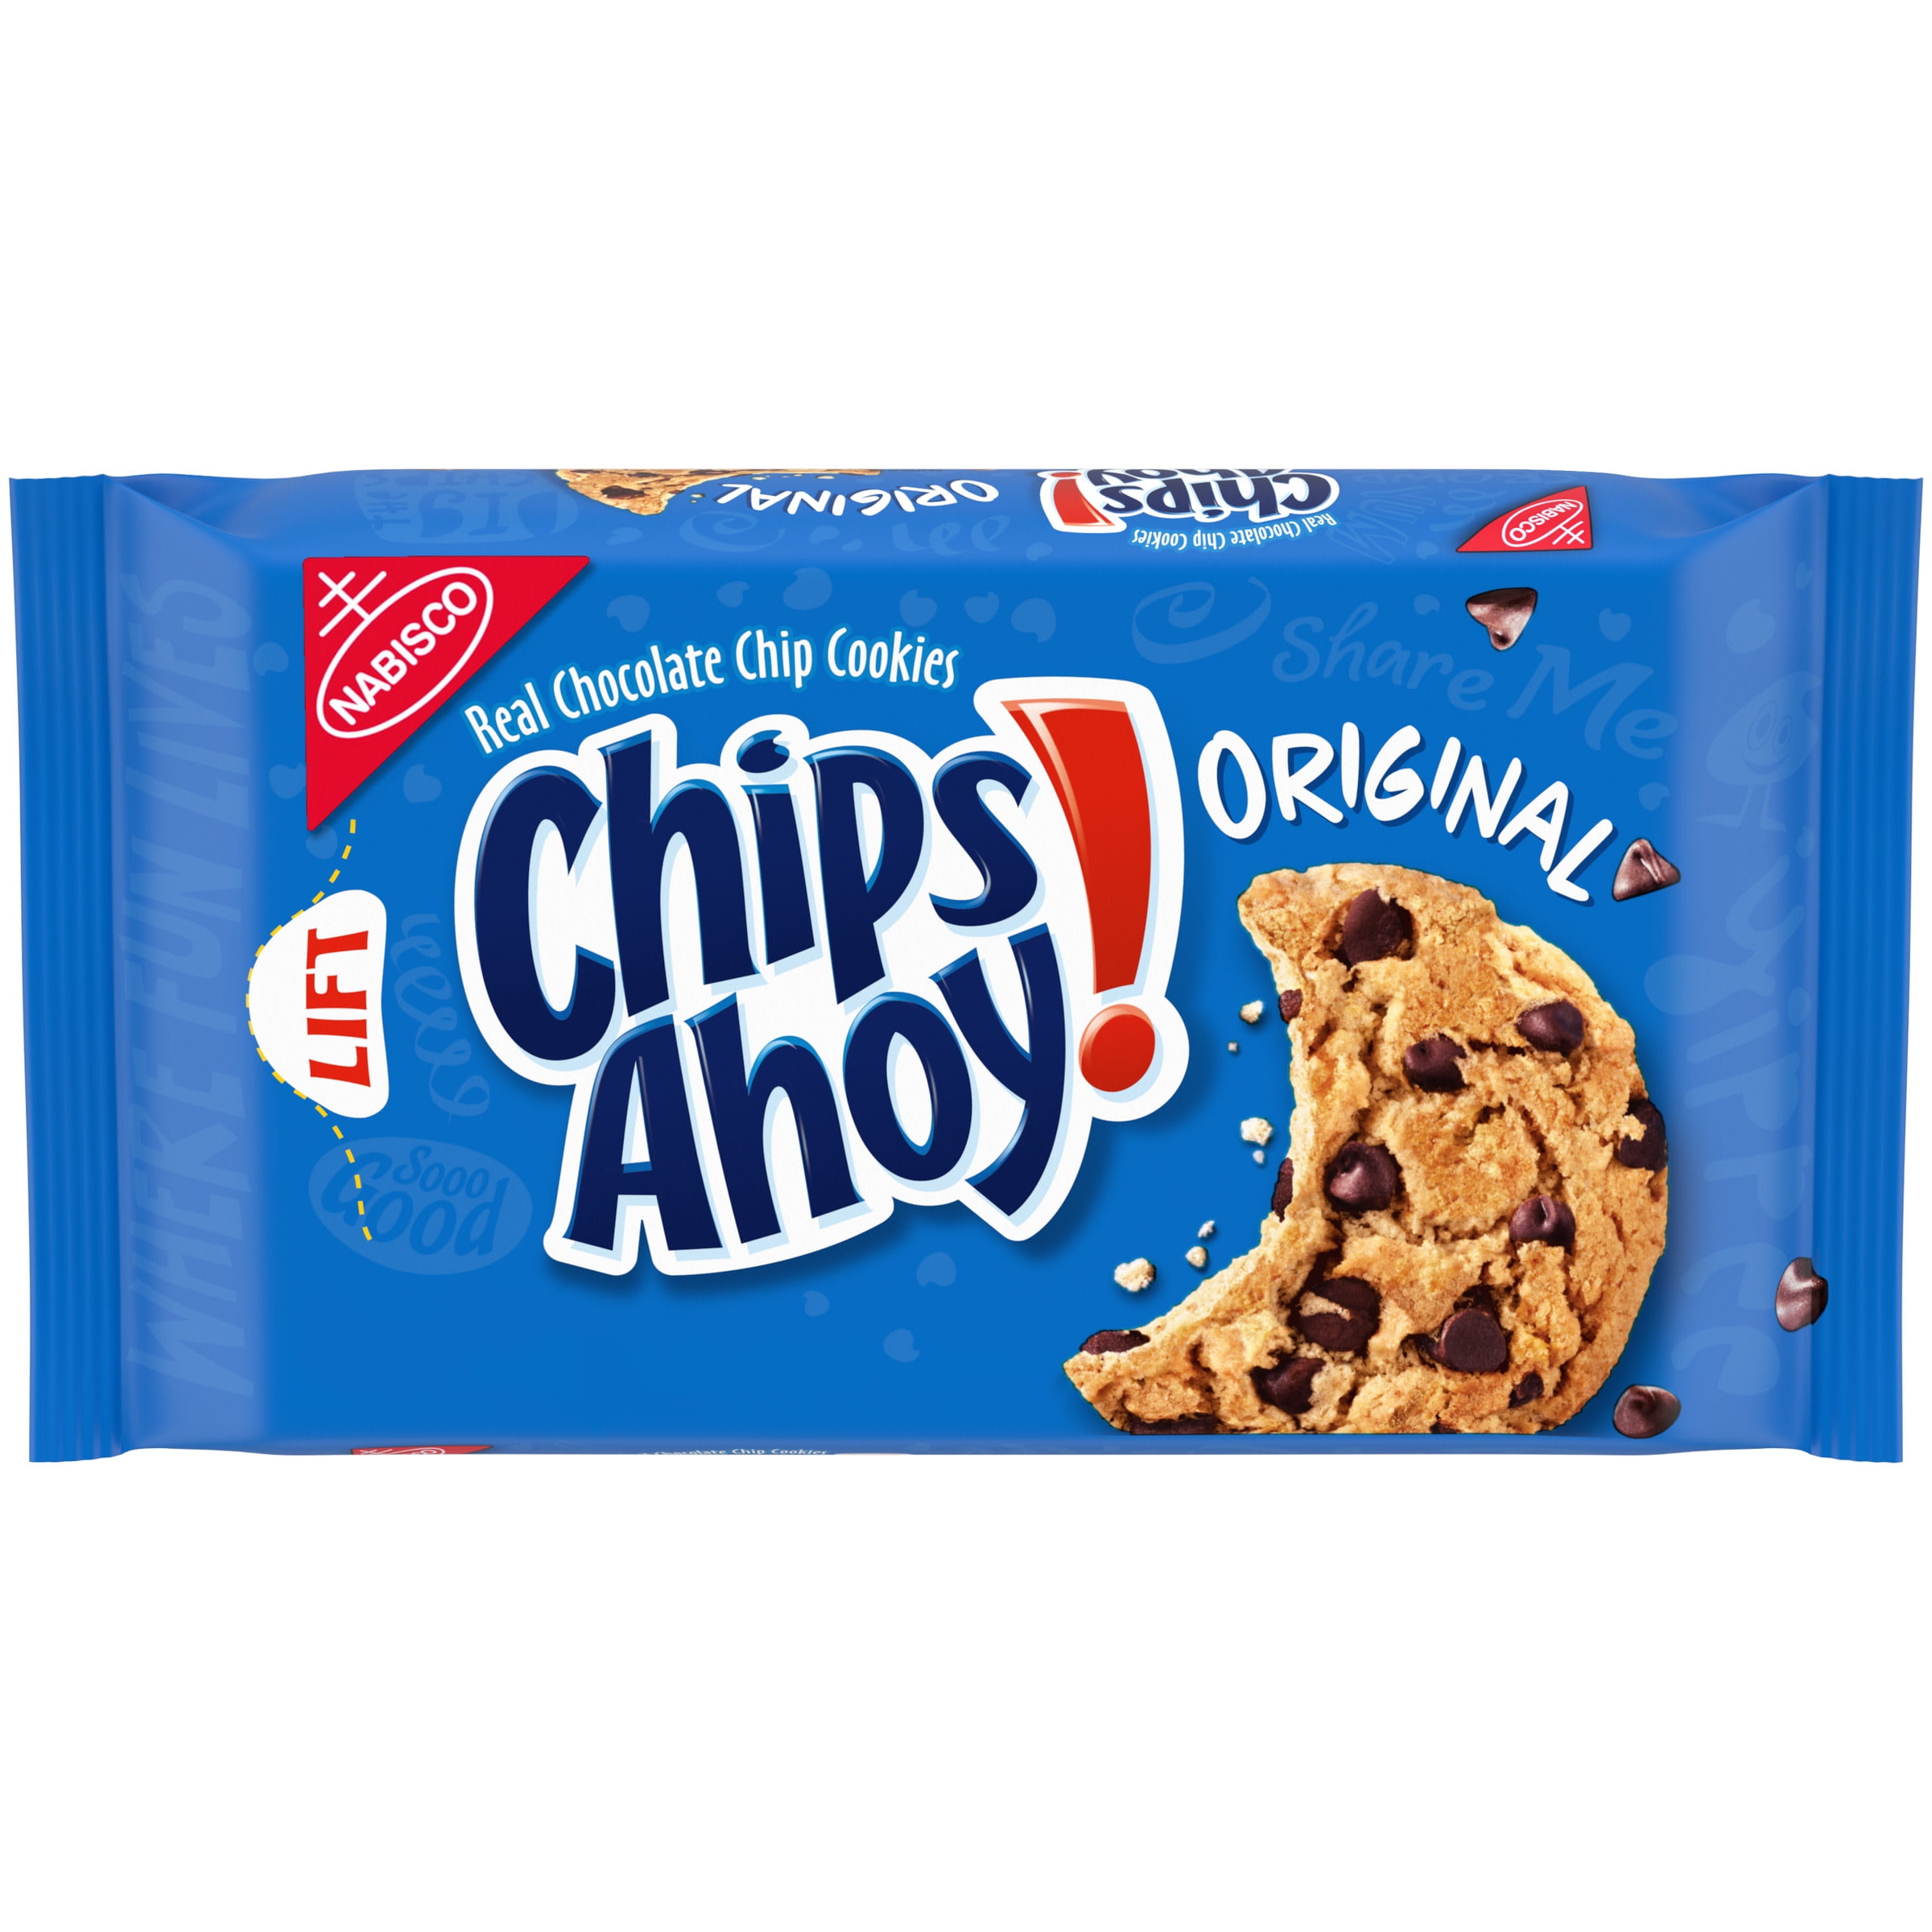 American snacks box chips cookies plus more